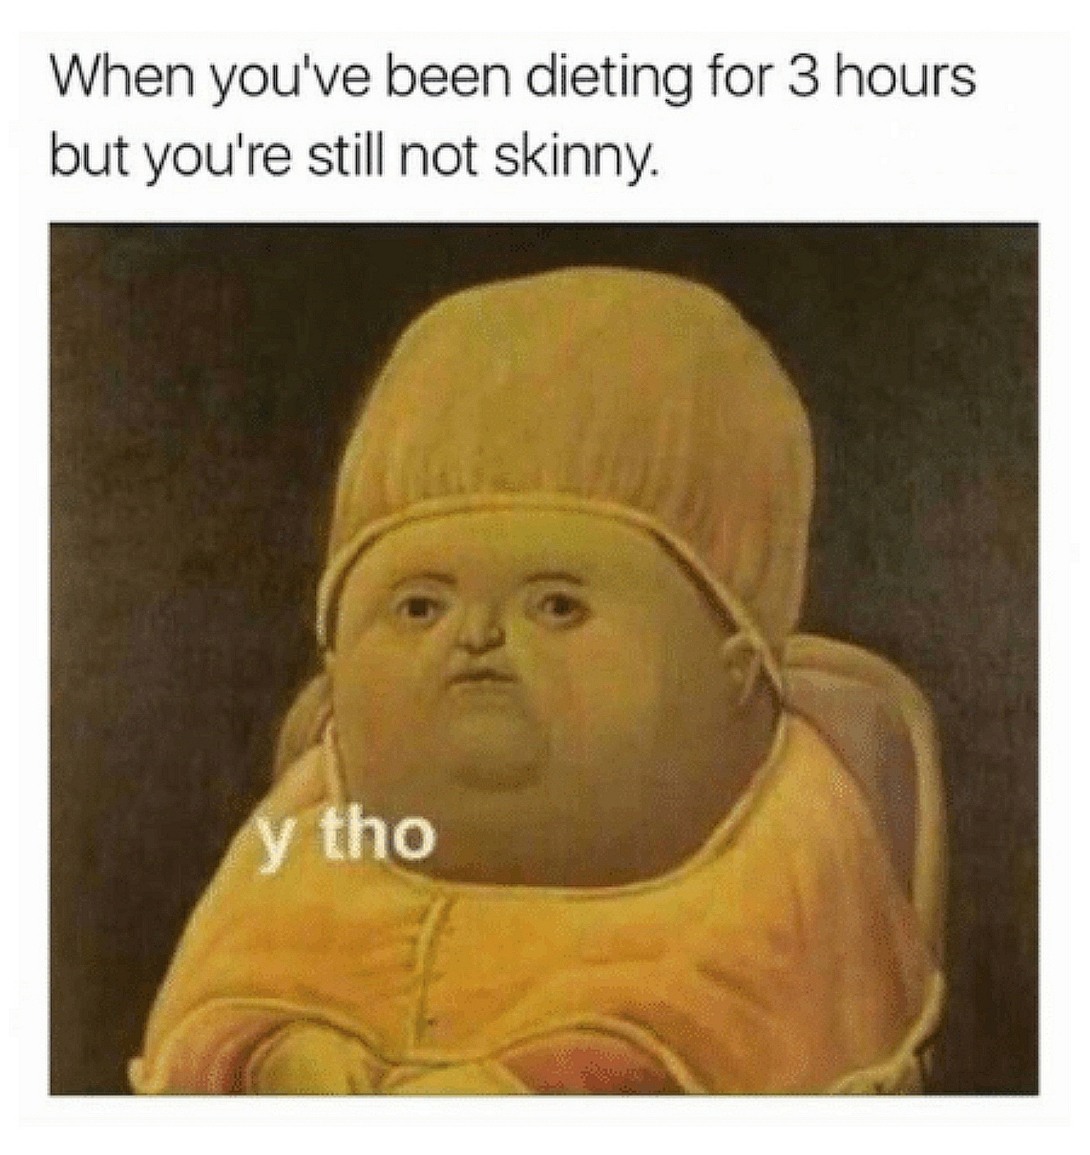 95 Of Diets Fail Meme By Soymod3 Memedroid